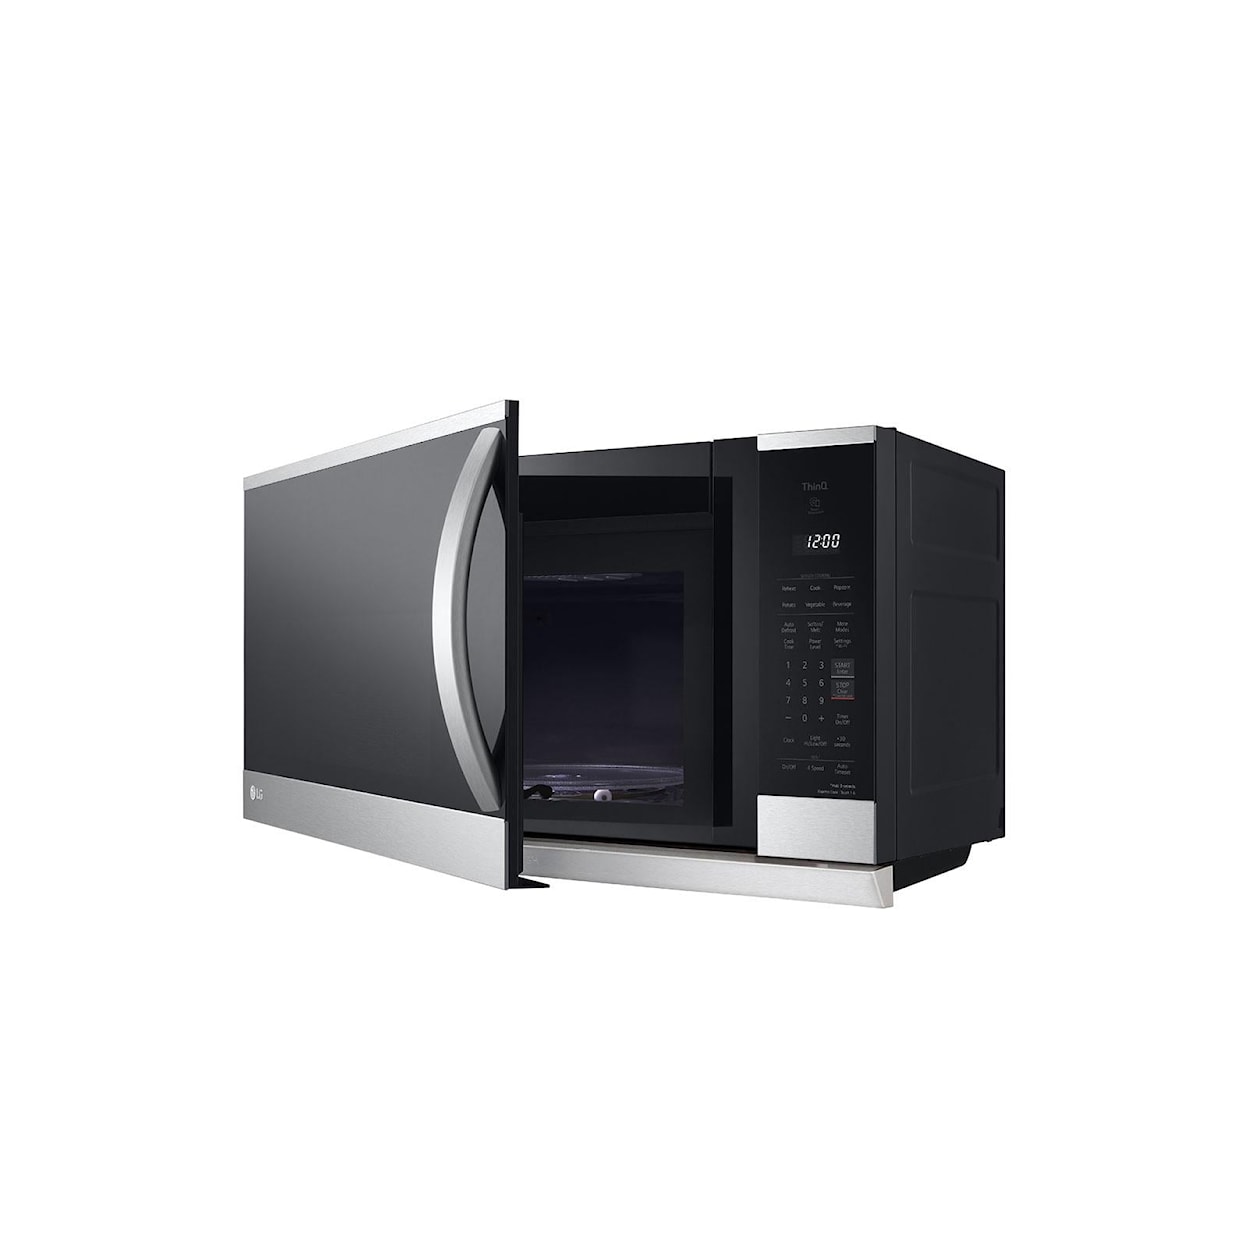 LG Appliances Microwave Microwave